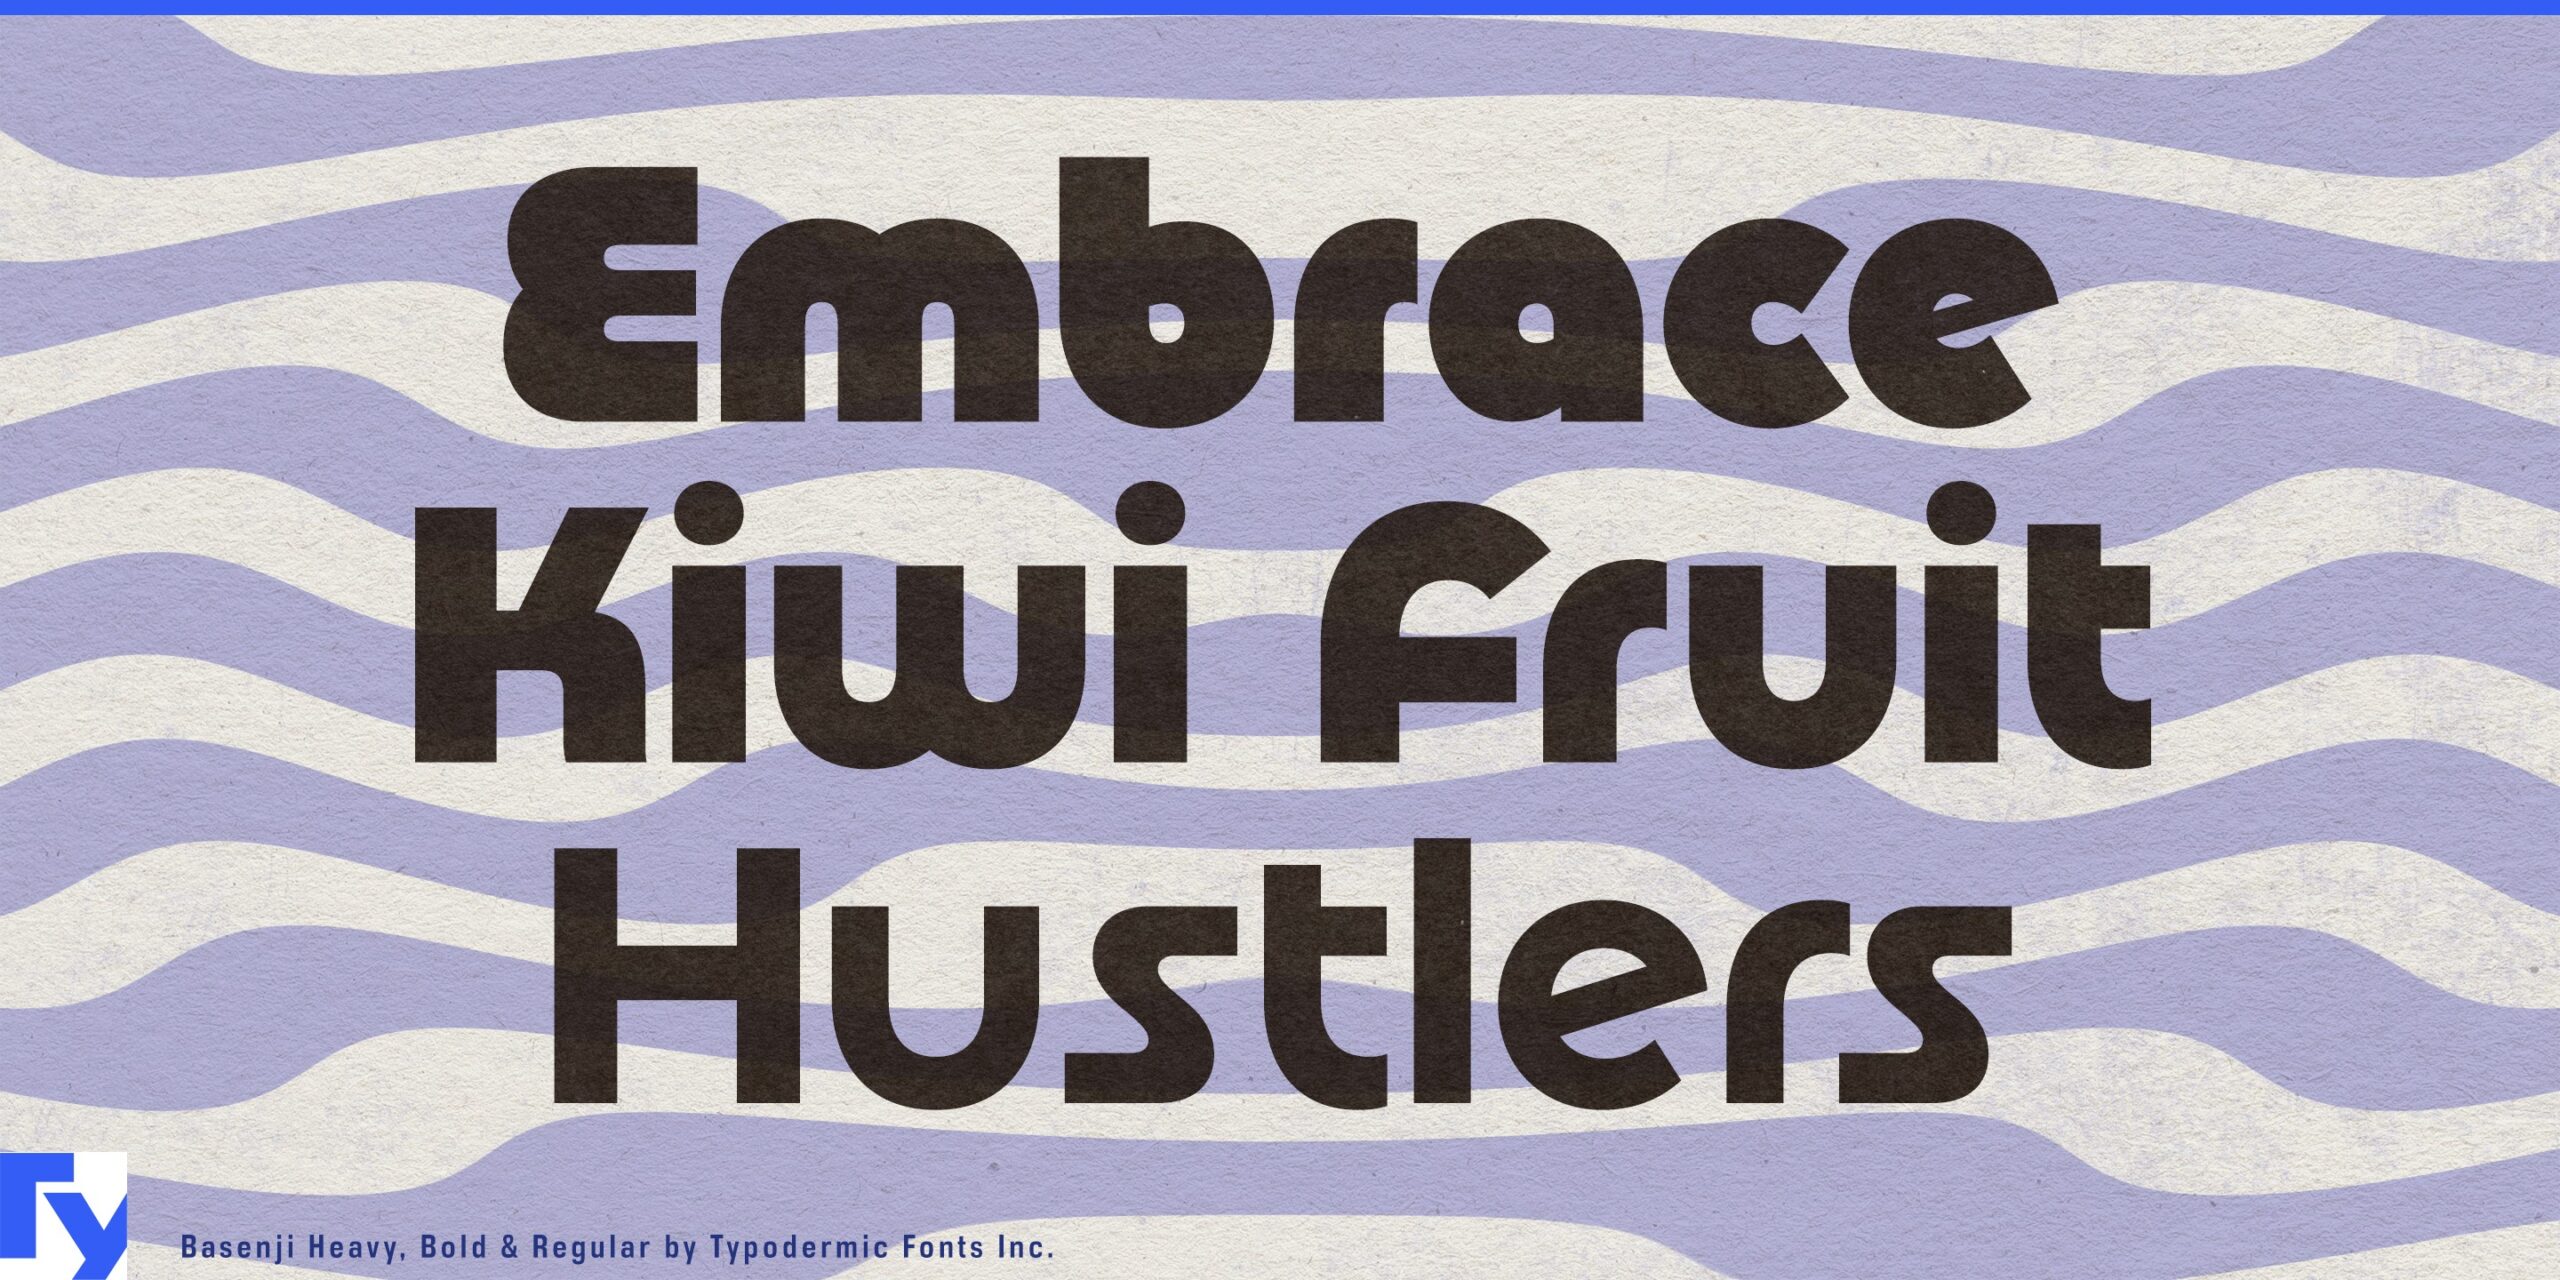 Basenji Typeface: Unconventional Design Inspired by Herbert Bayer